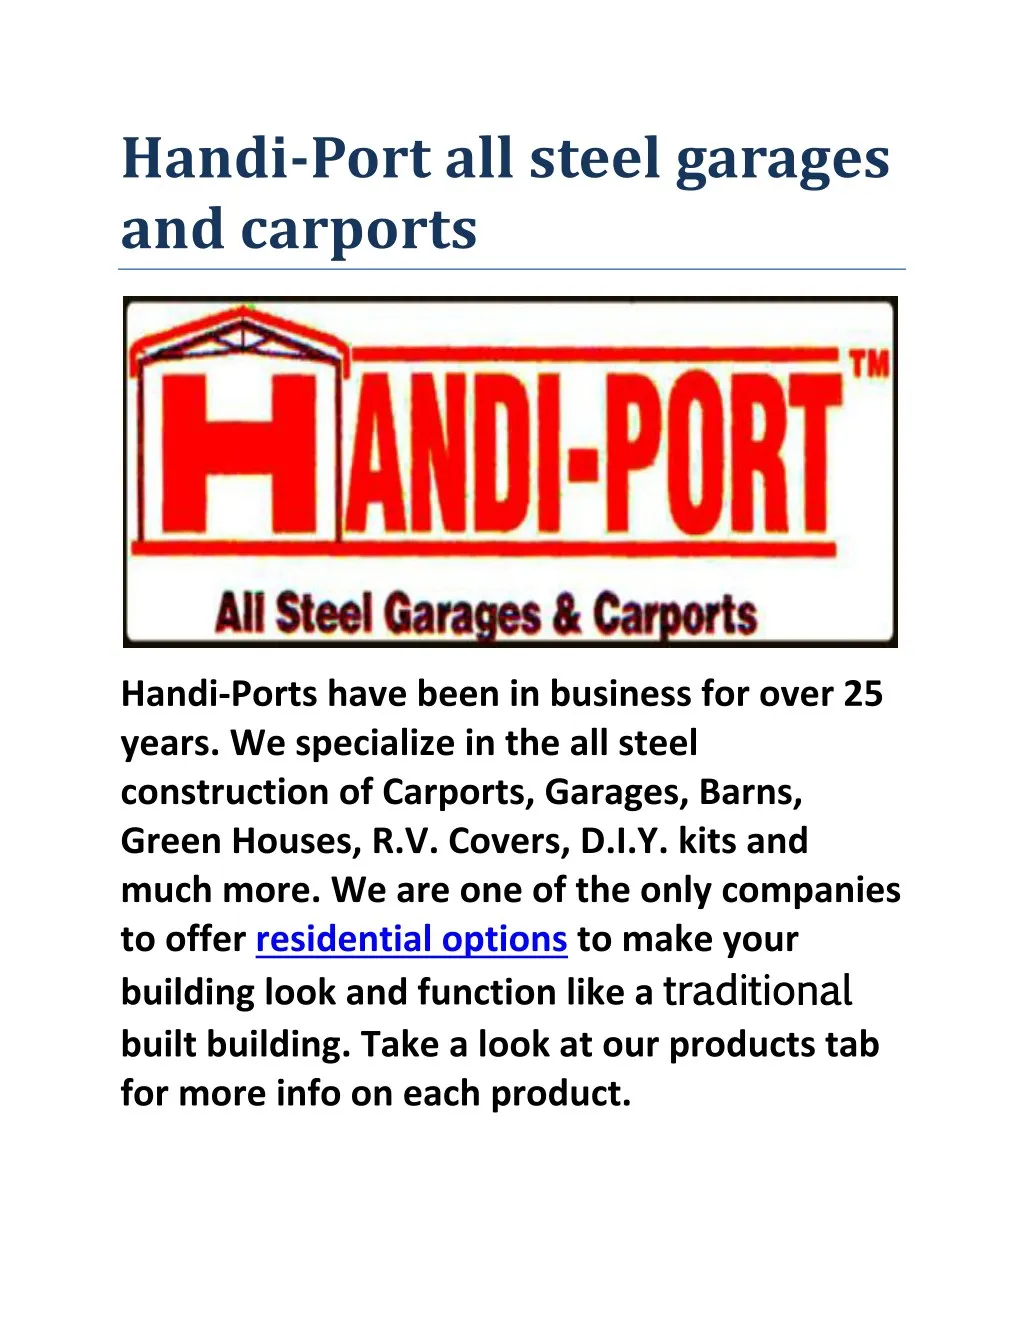 handi port all steel garages and carports